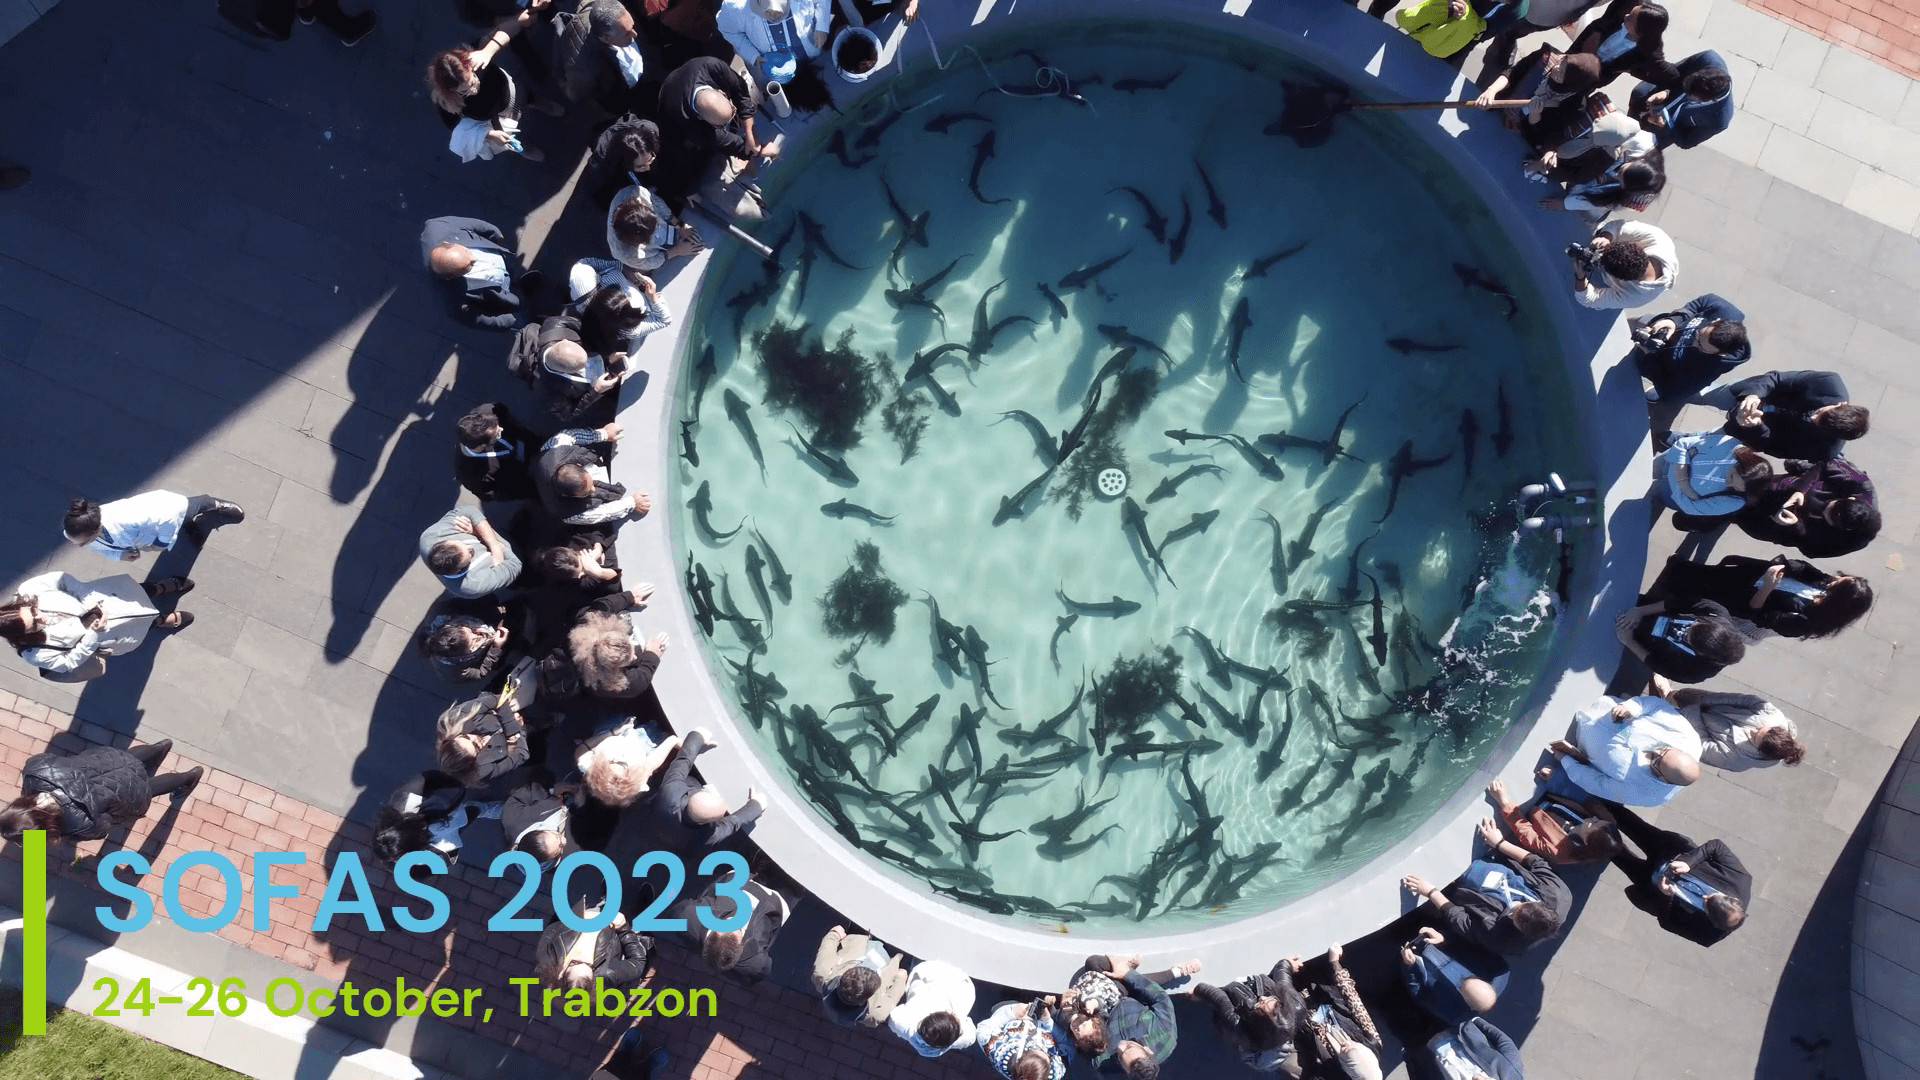 SOFAS 2023 | International Symposium on Fisheries and Aquatic Sciences